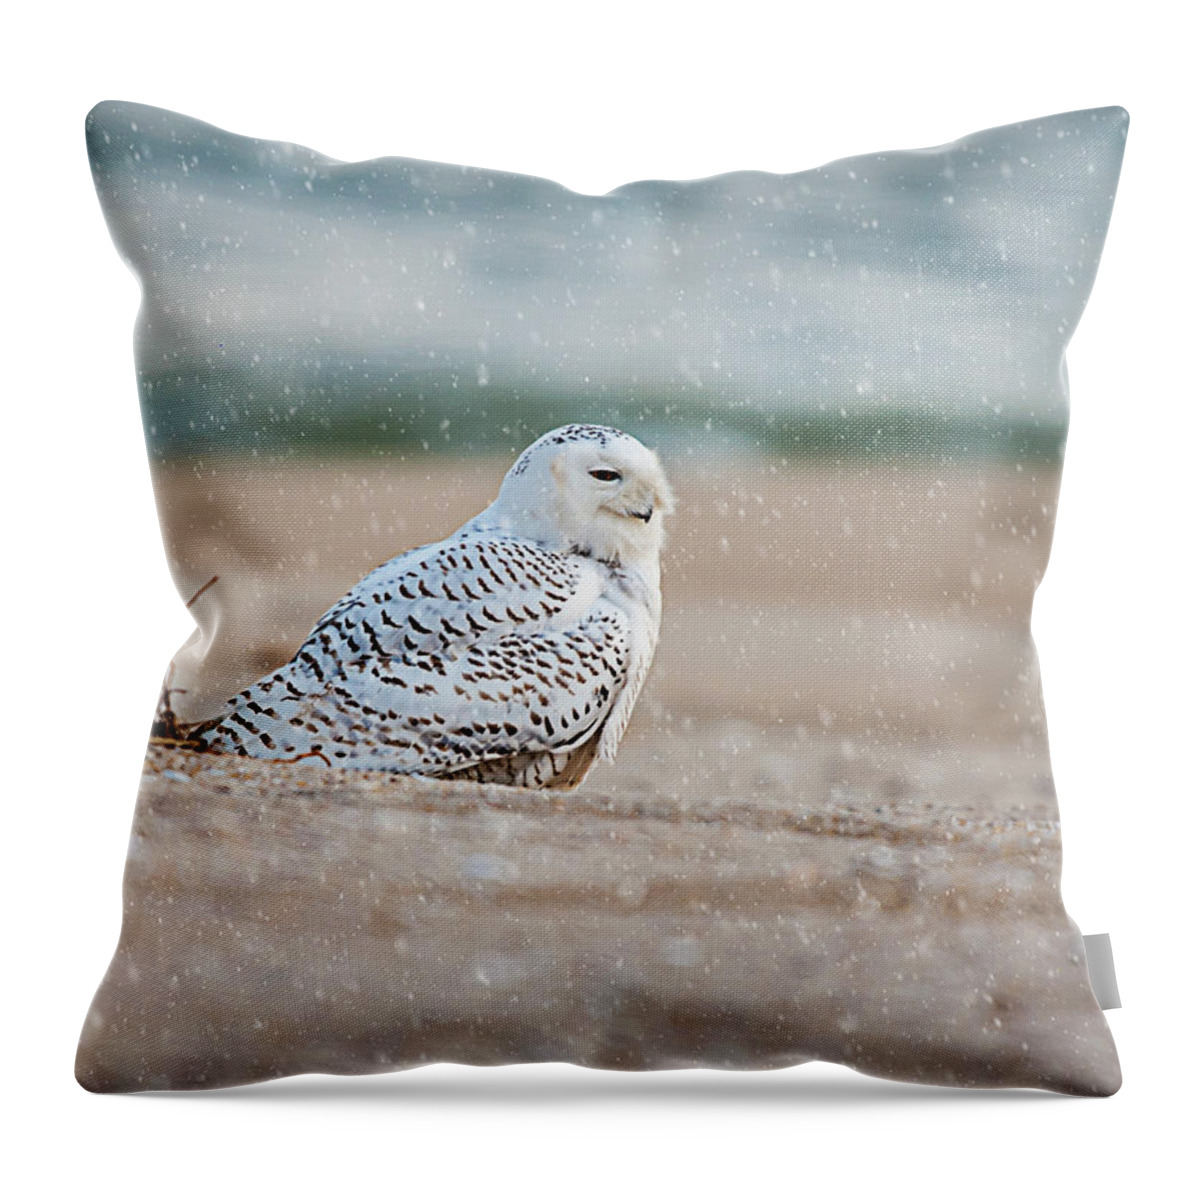 Snowy Owl Throw Pillow featuring the photograph Snowy Owl #3 by Cathy Kovarik